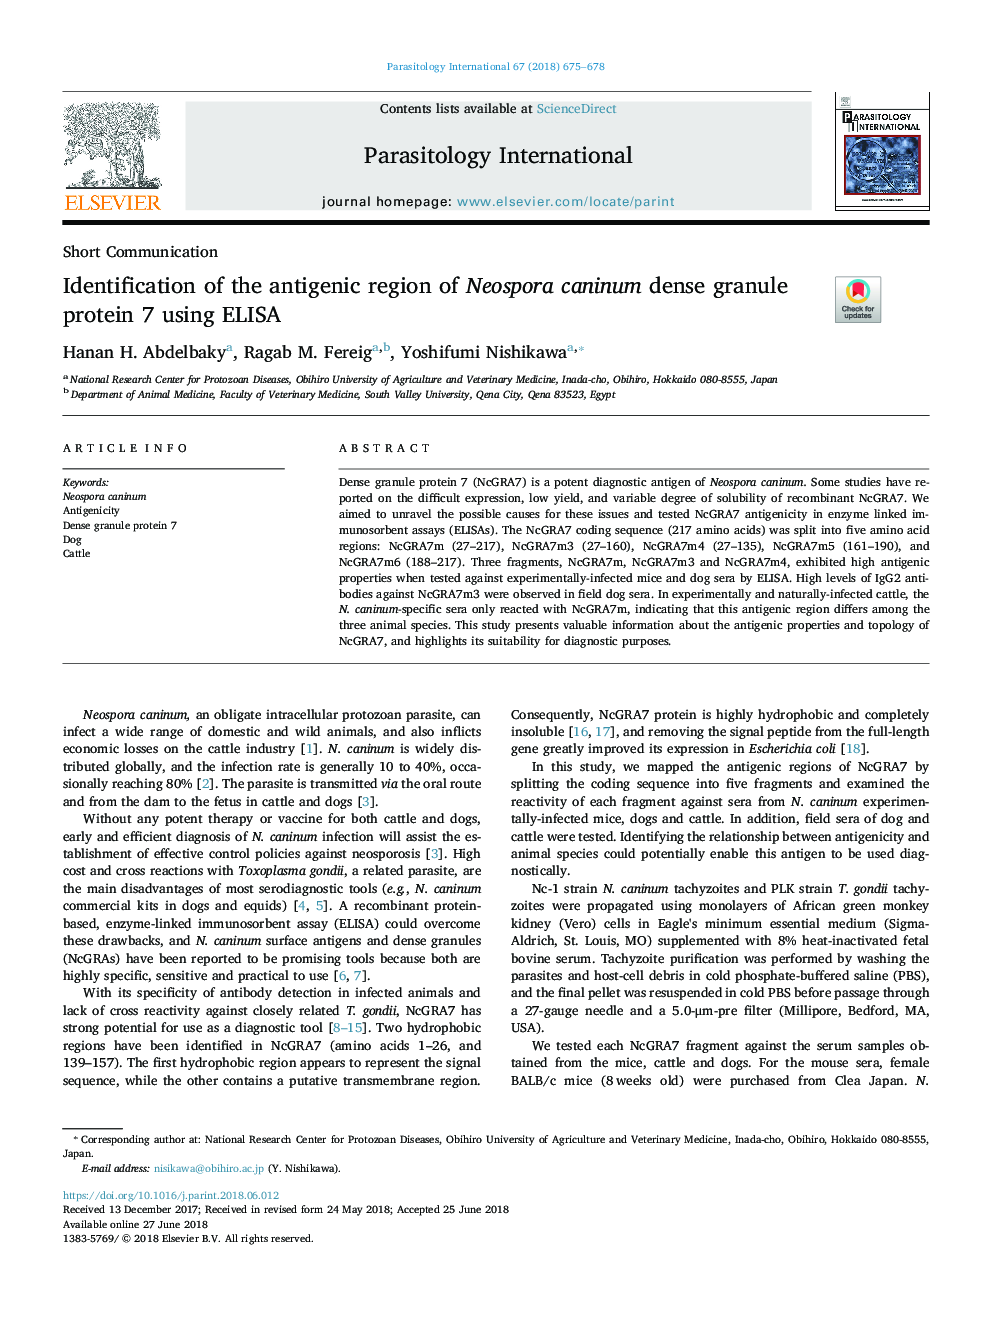 Identification of the antigenic region of Neospora caninum dense granule protein 7 using ELISA